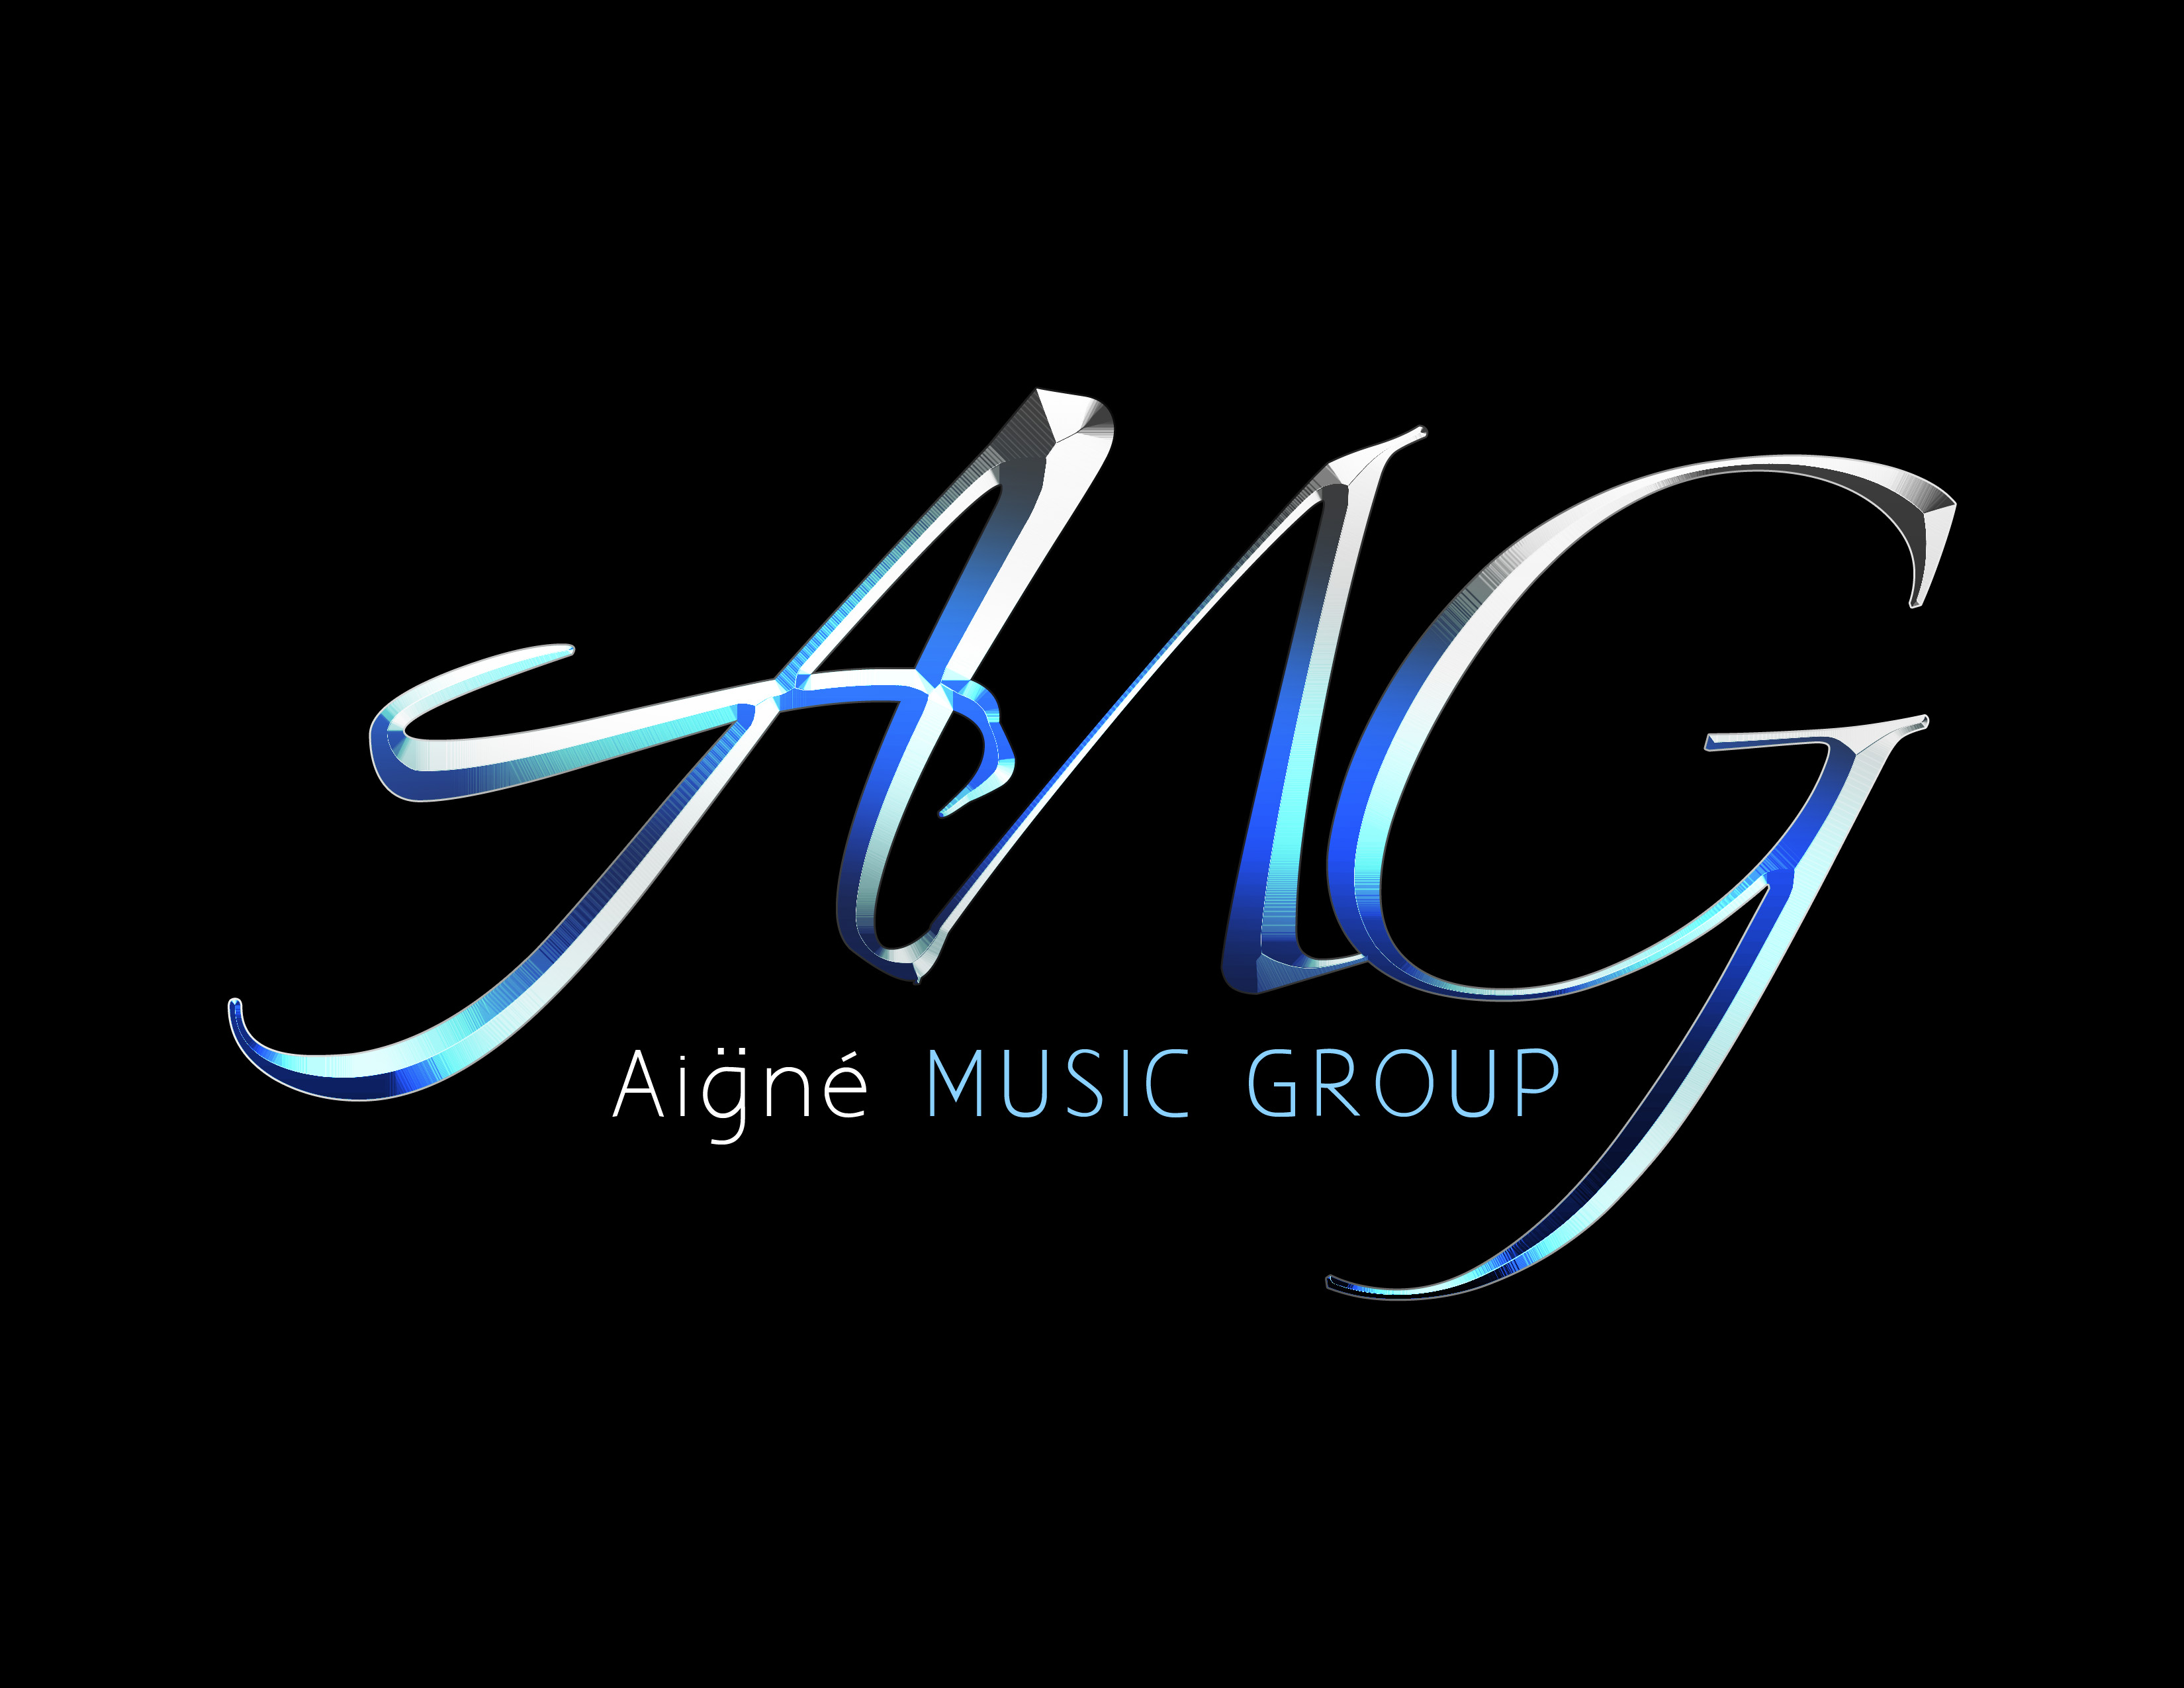 Aigne Music Group